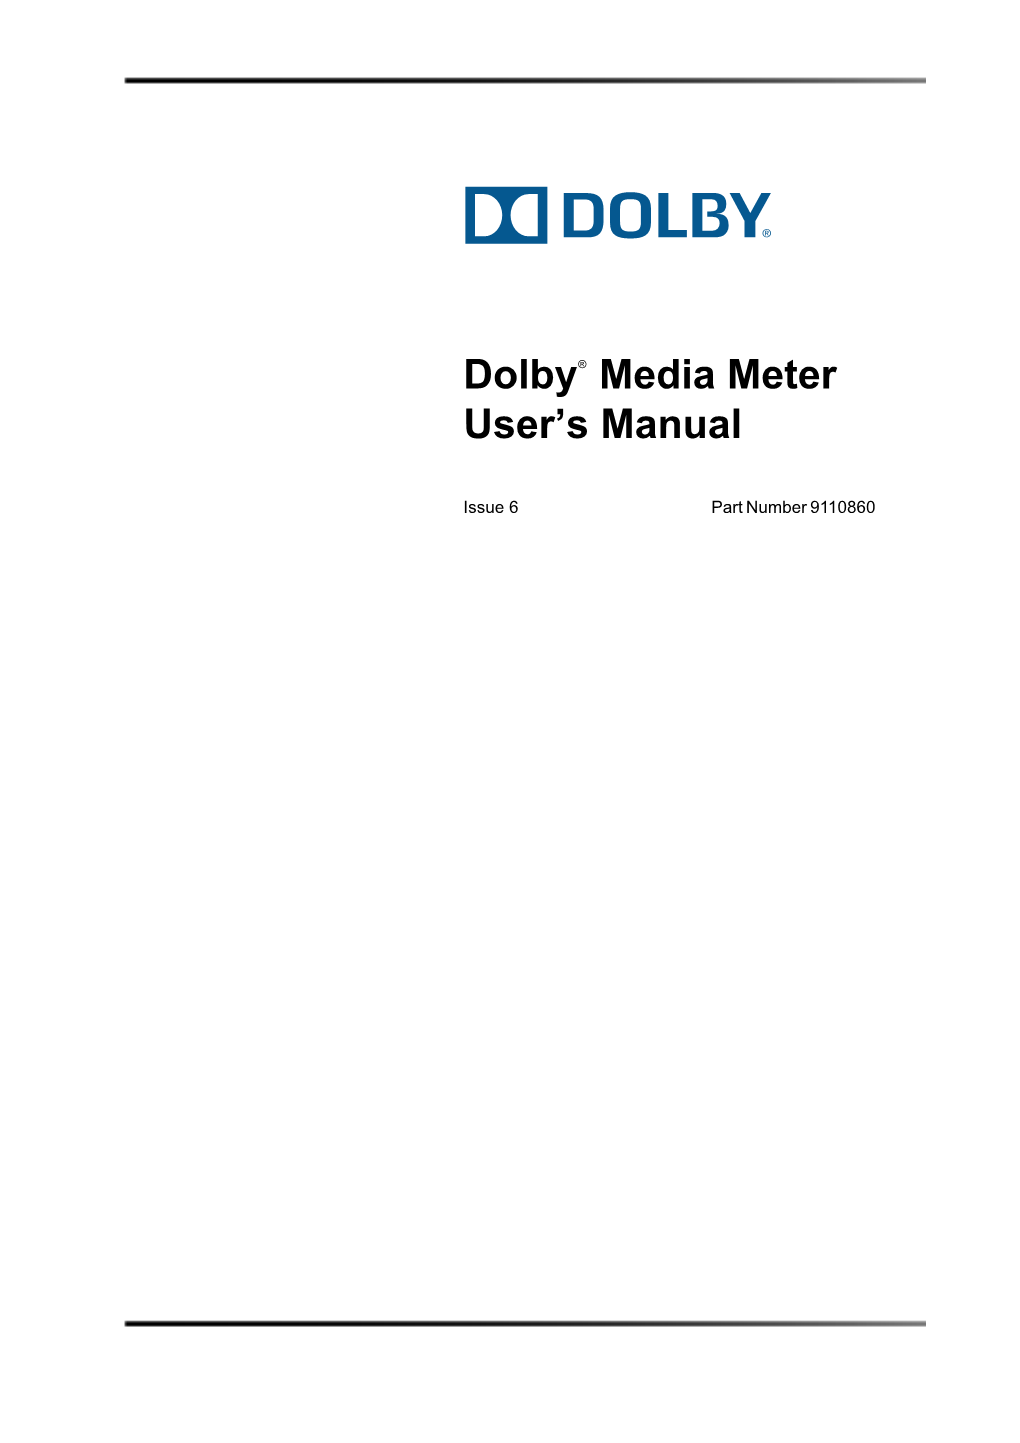 Dolby Media Meter User's Manual